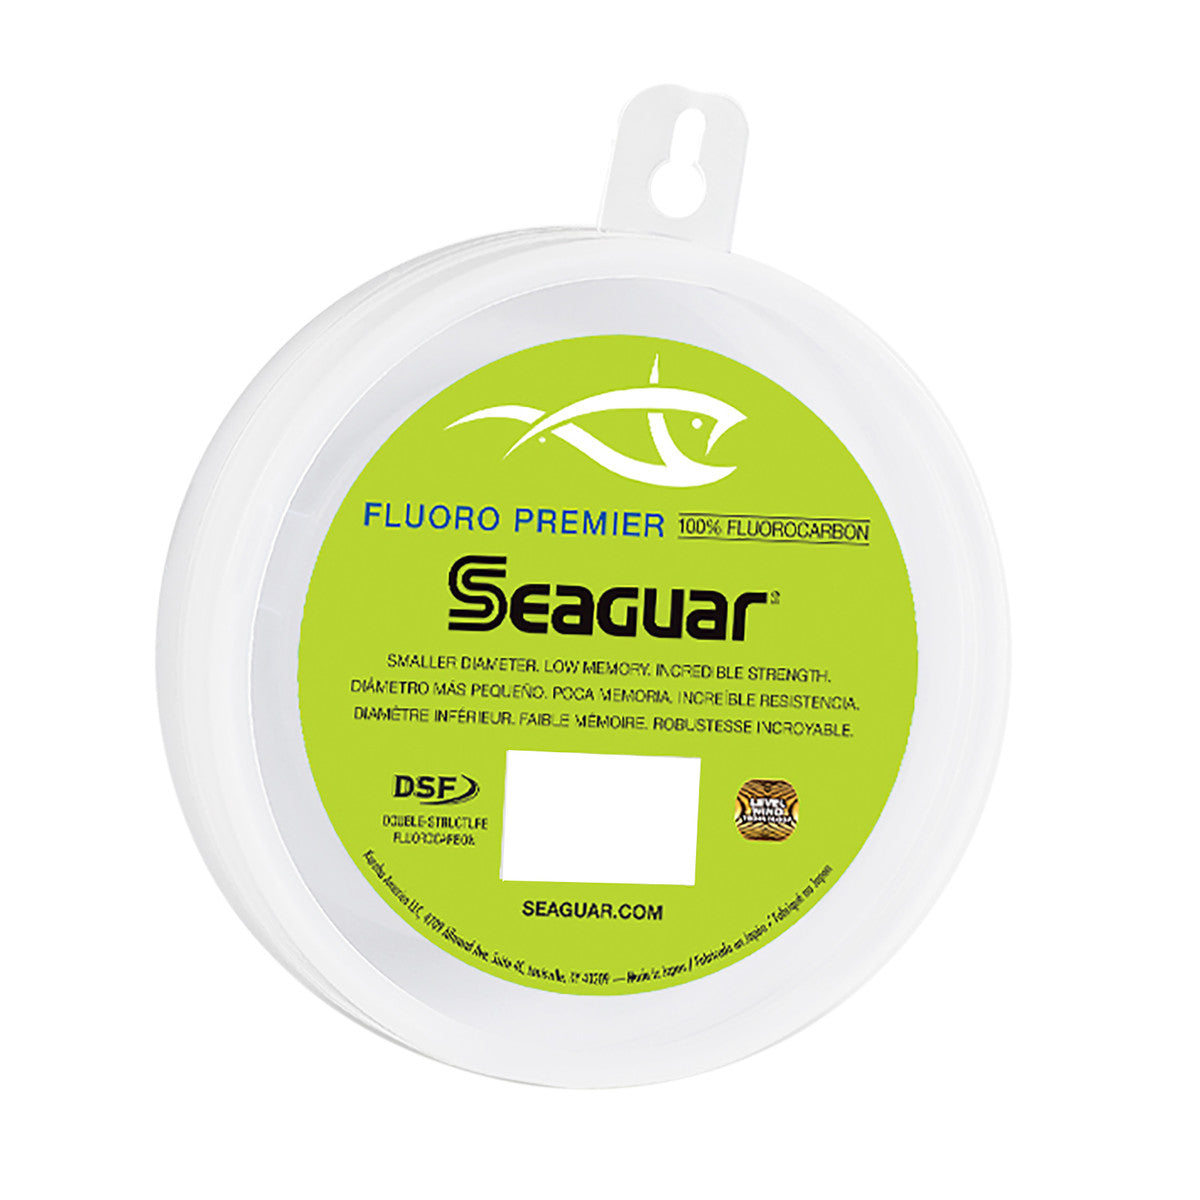 Seaguar Fluoro Premier Fluorocarbon Leader Material